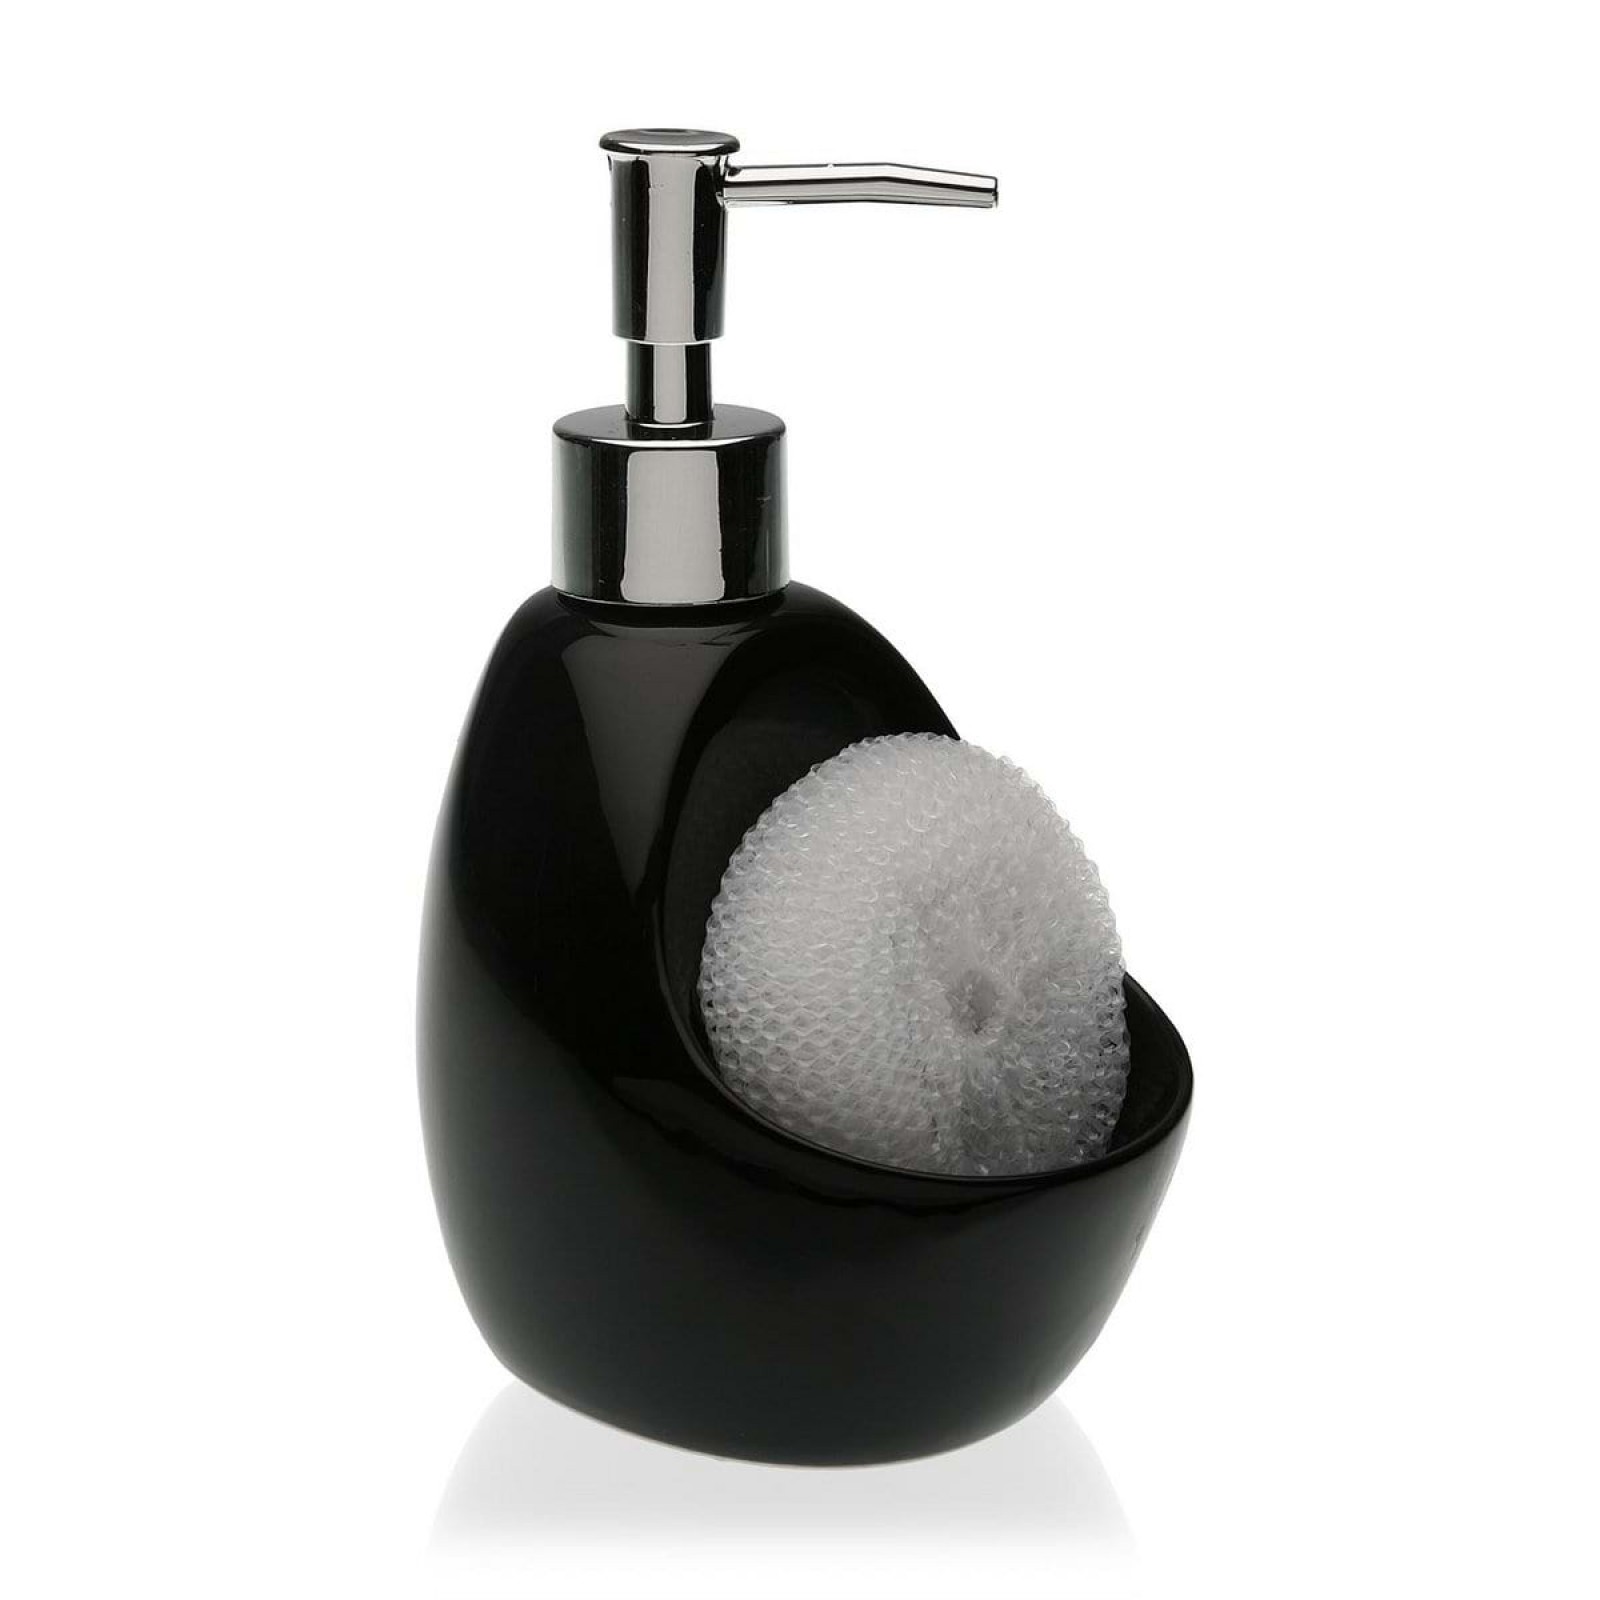 Ceramic Soap Pump With Sponge Holder (Black / Silver) - Versa